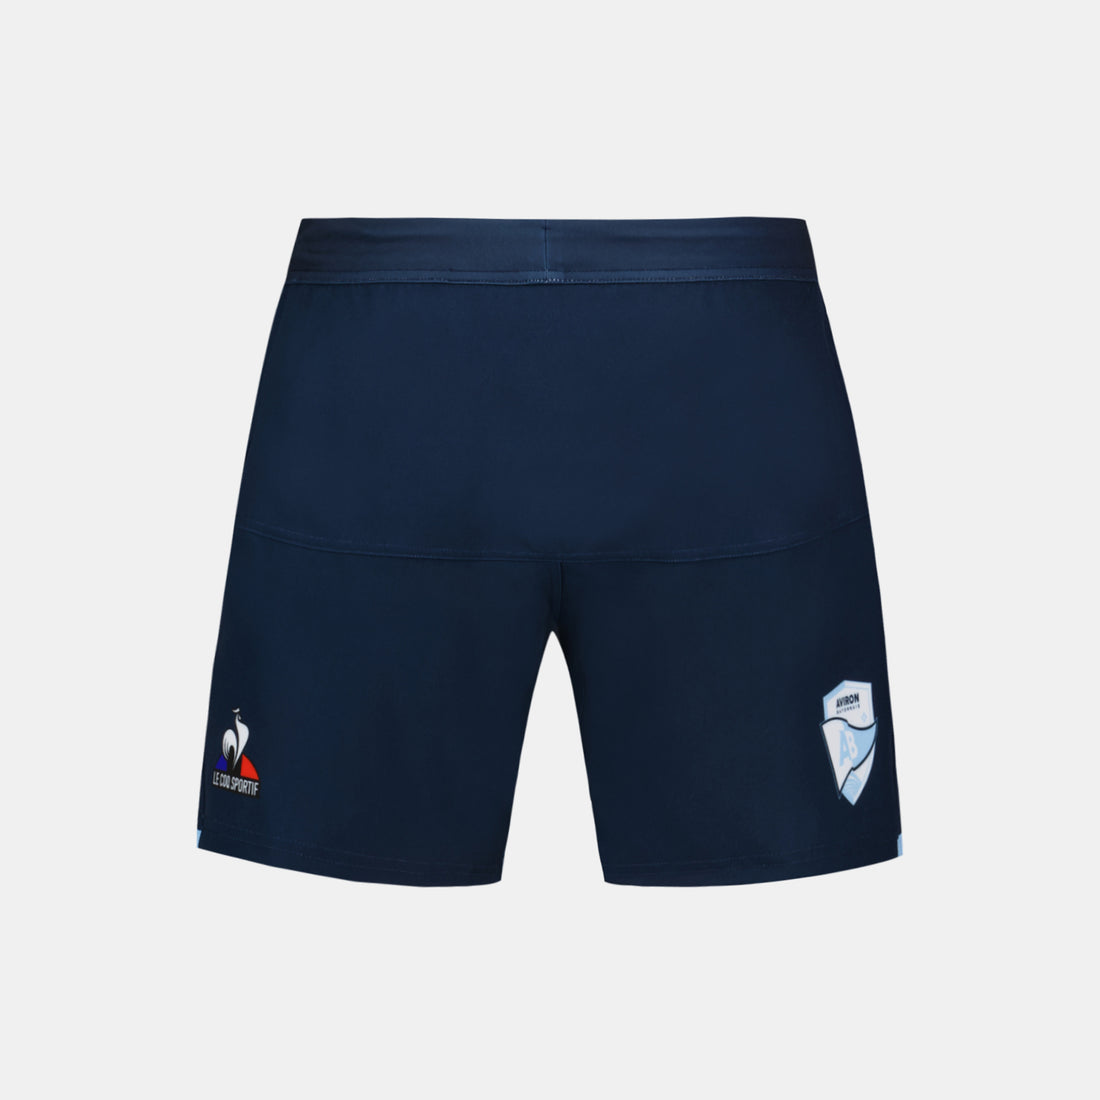 2320302-AB PRO Short M blue navy  | Shorts for men